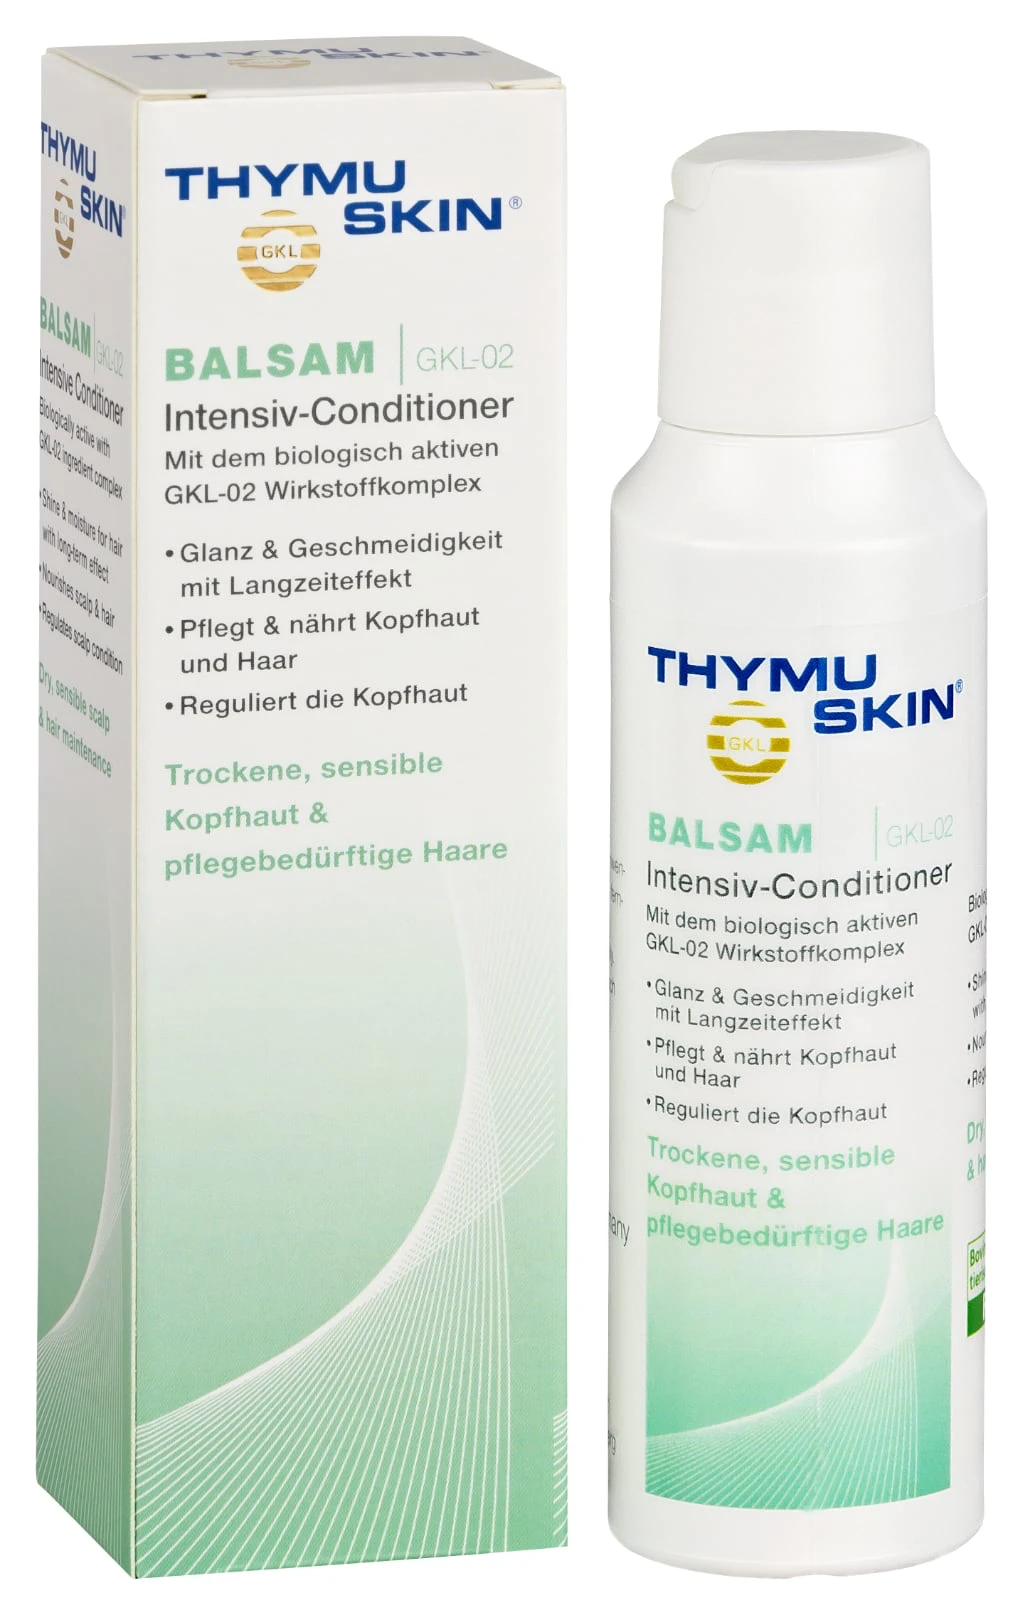 BALSAM Intensiv-Conditioner